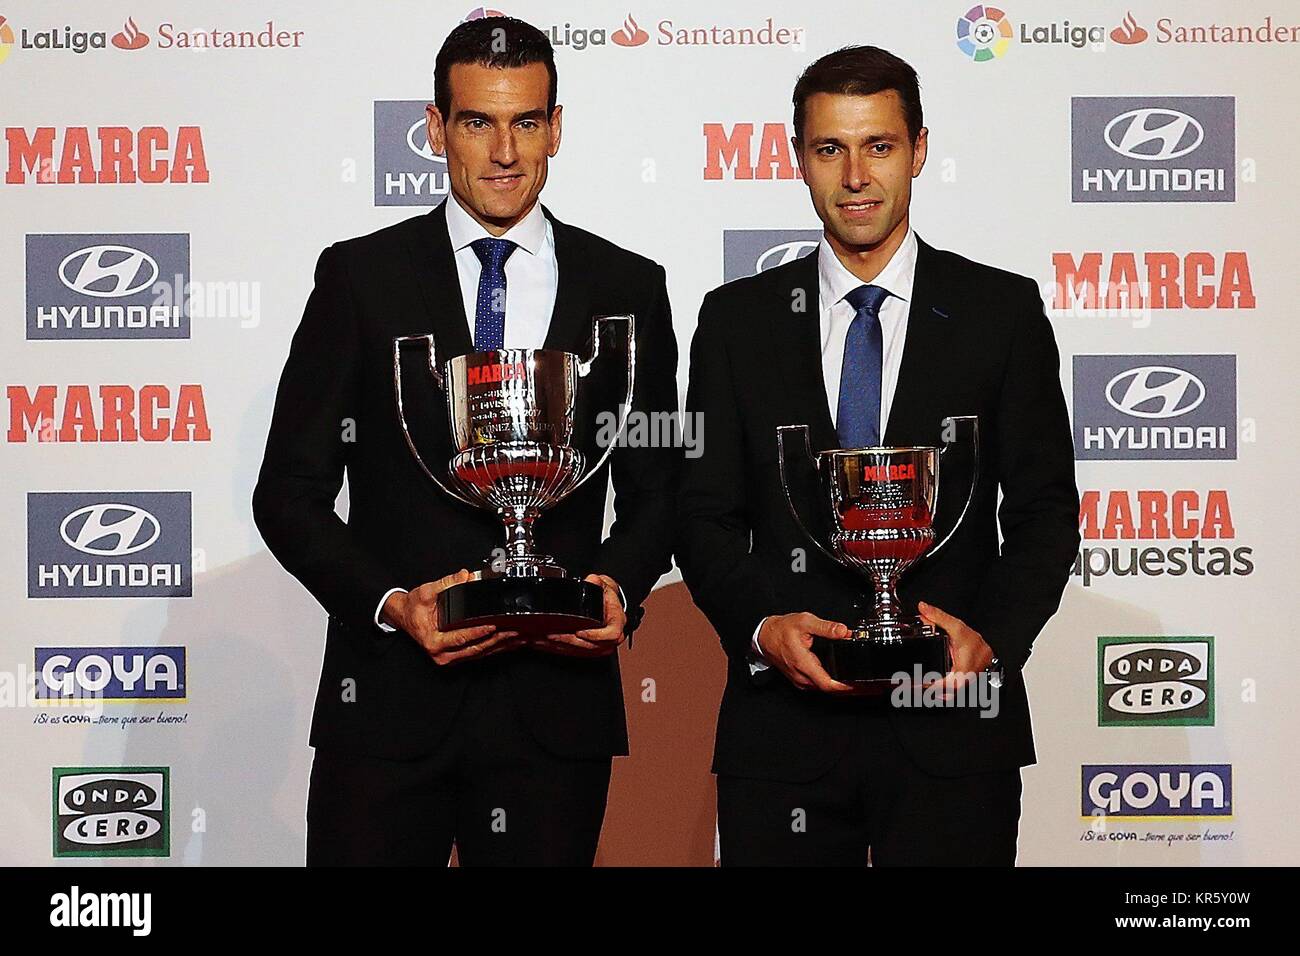 Spanish referees Juan Martinez Munuera (L) and Adrian Cordero Vega (R) pose  with the Guruceta Award to the best referees in La Liga and La Liga 123 ( Spanish Second Division) during 2016-2017